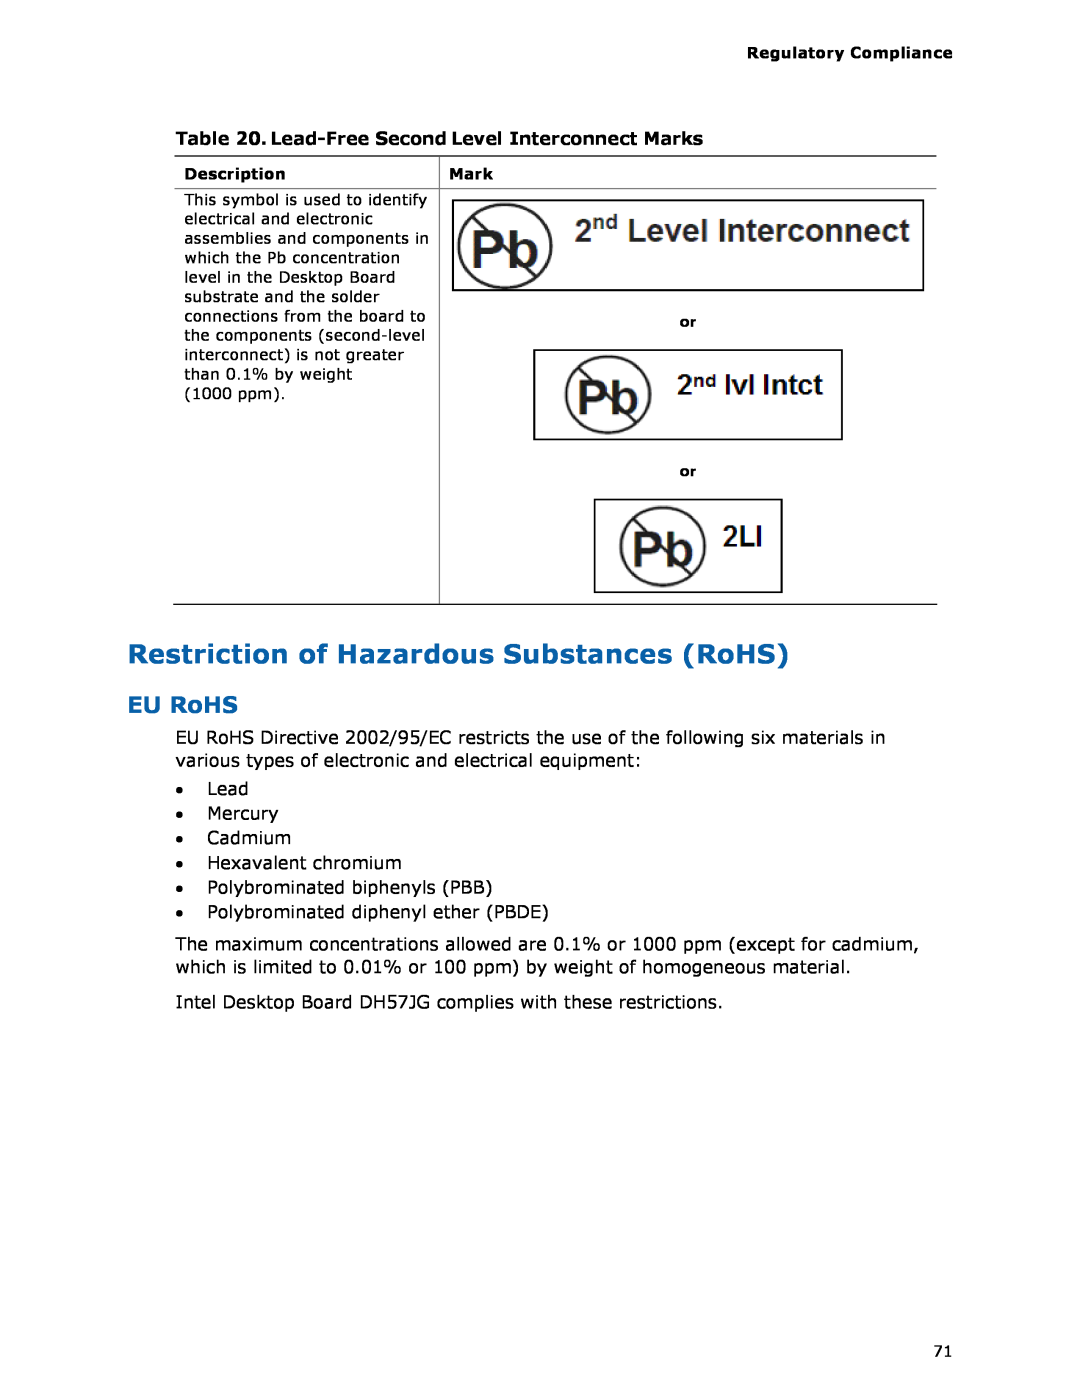 Intel BLKDH57JG manual Restriction of Hazardous Substances RoHS, EU RoHS, Lead-Free Second Level Interconnect Marks 